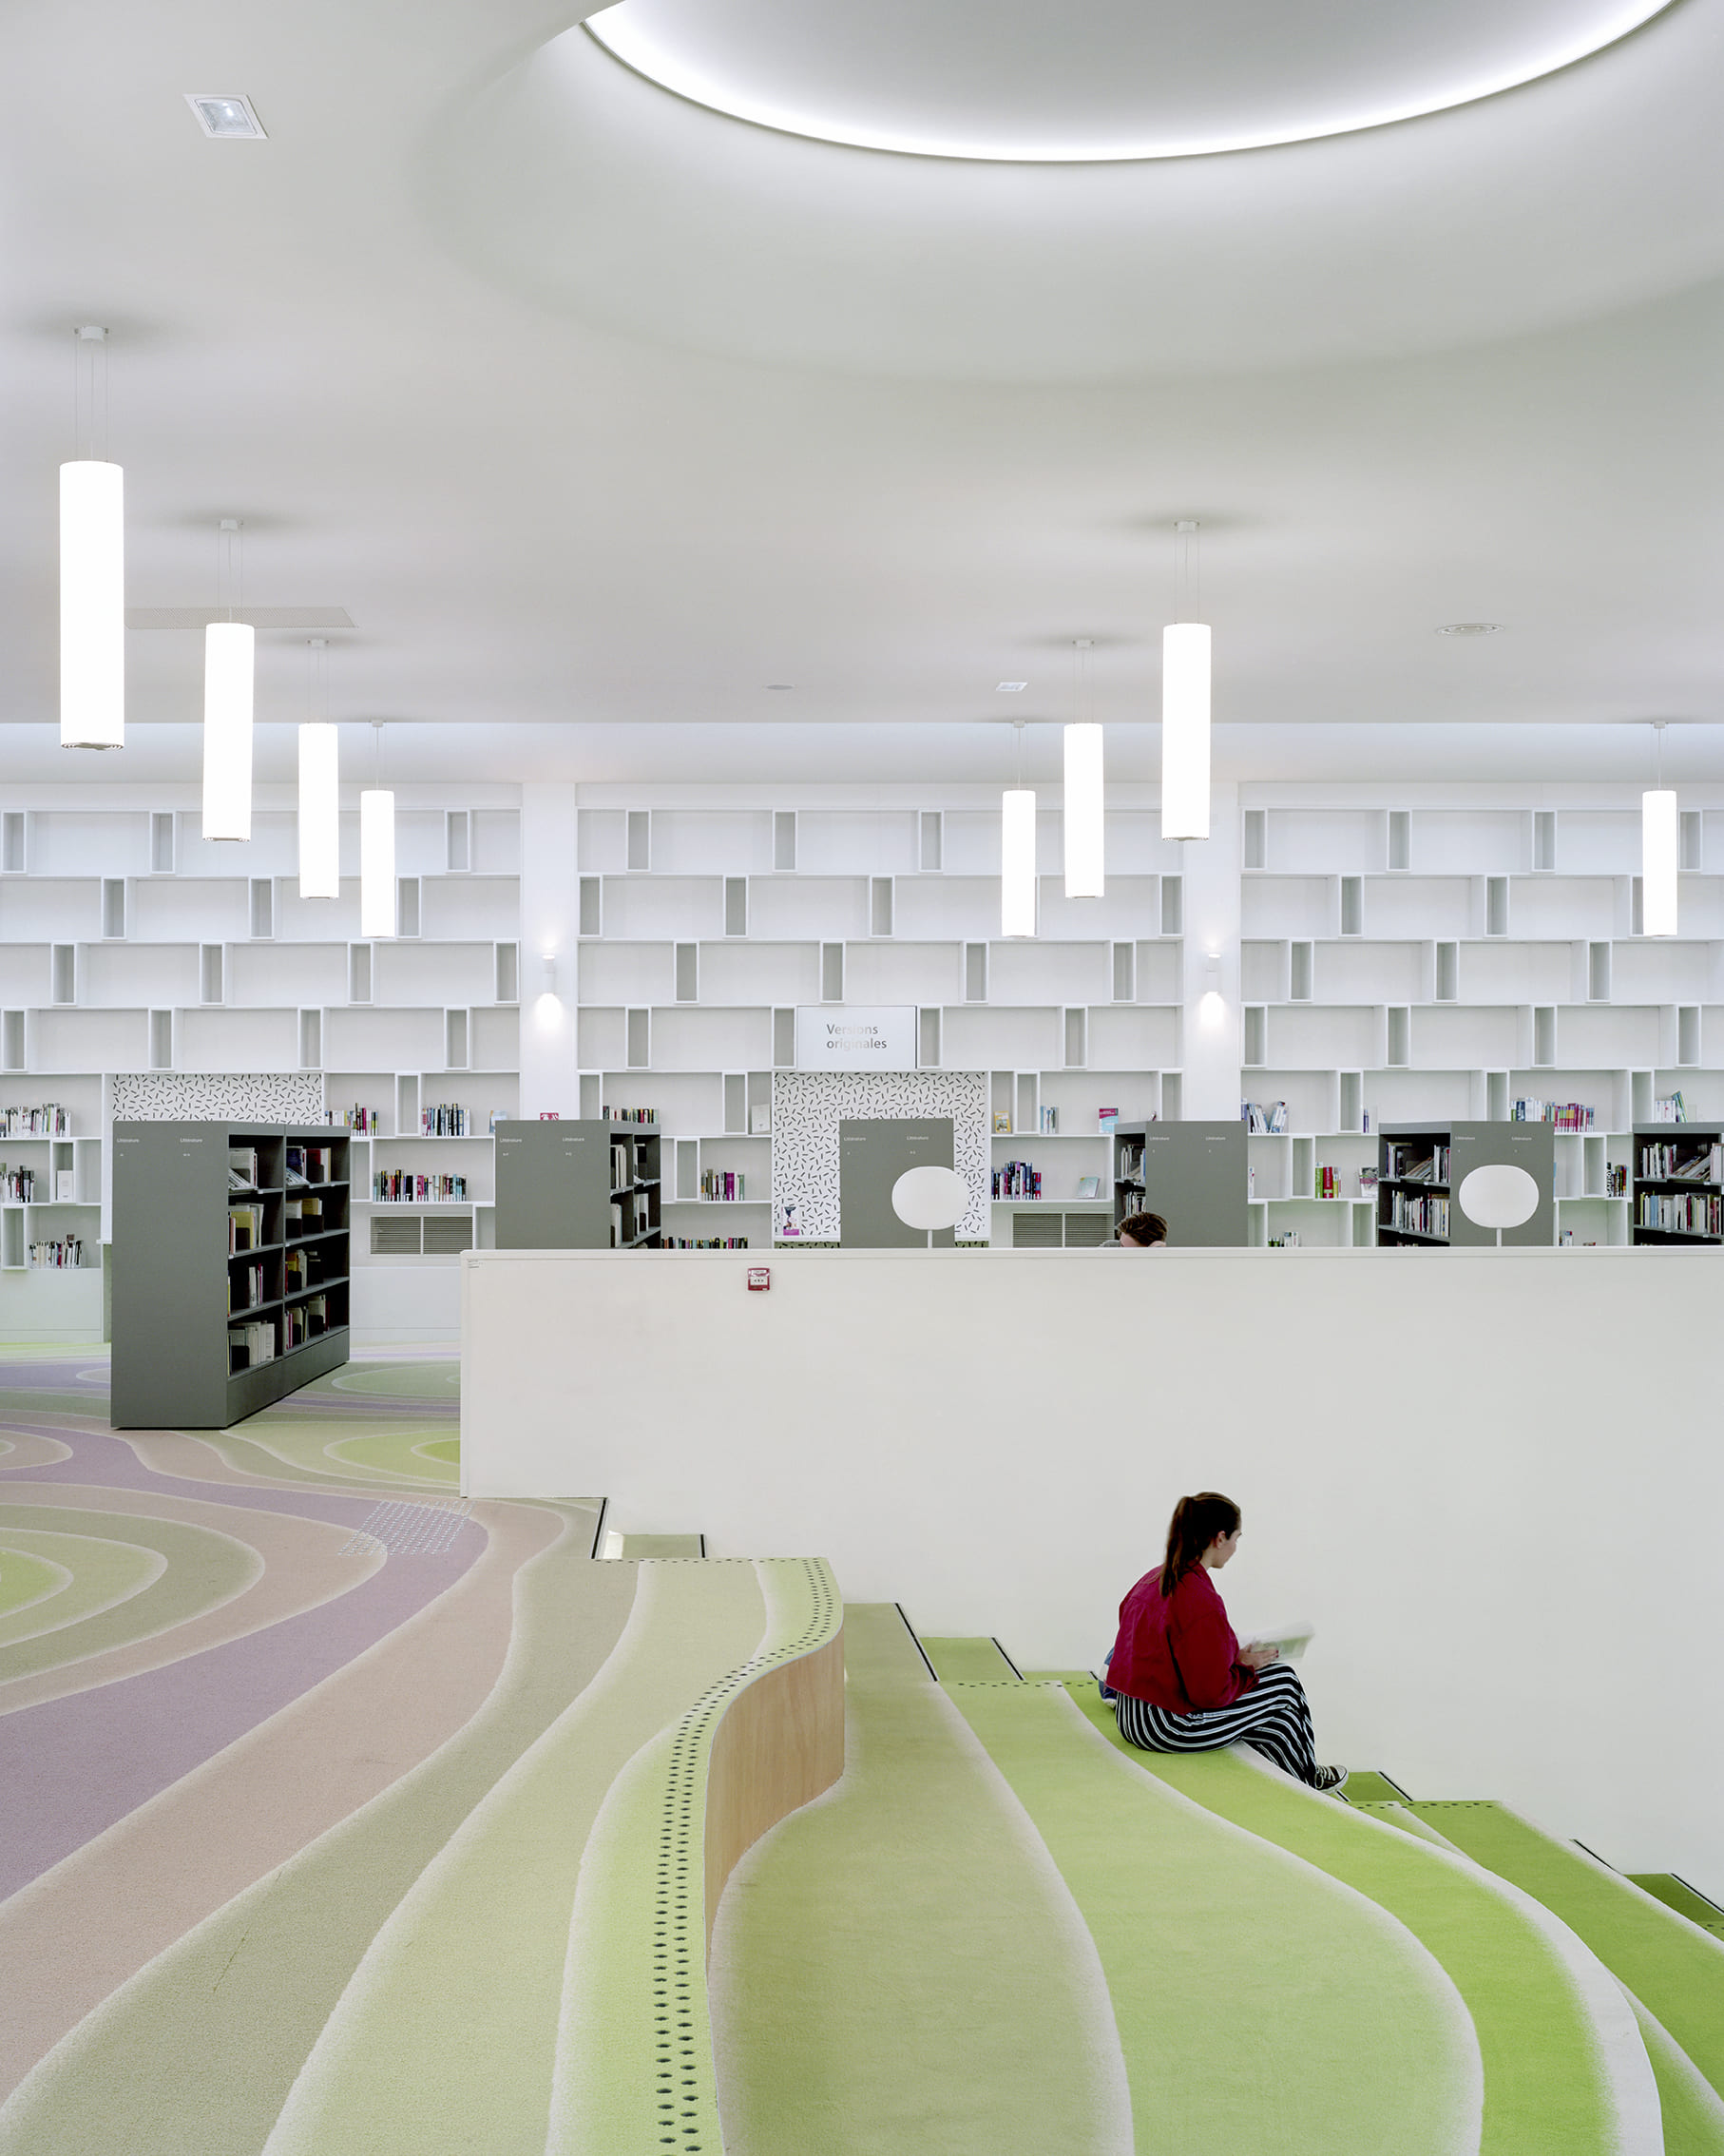 LA BIB – Dunkerque Library